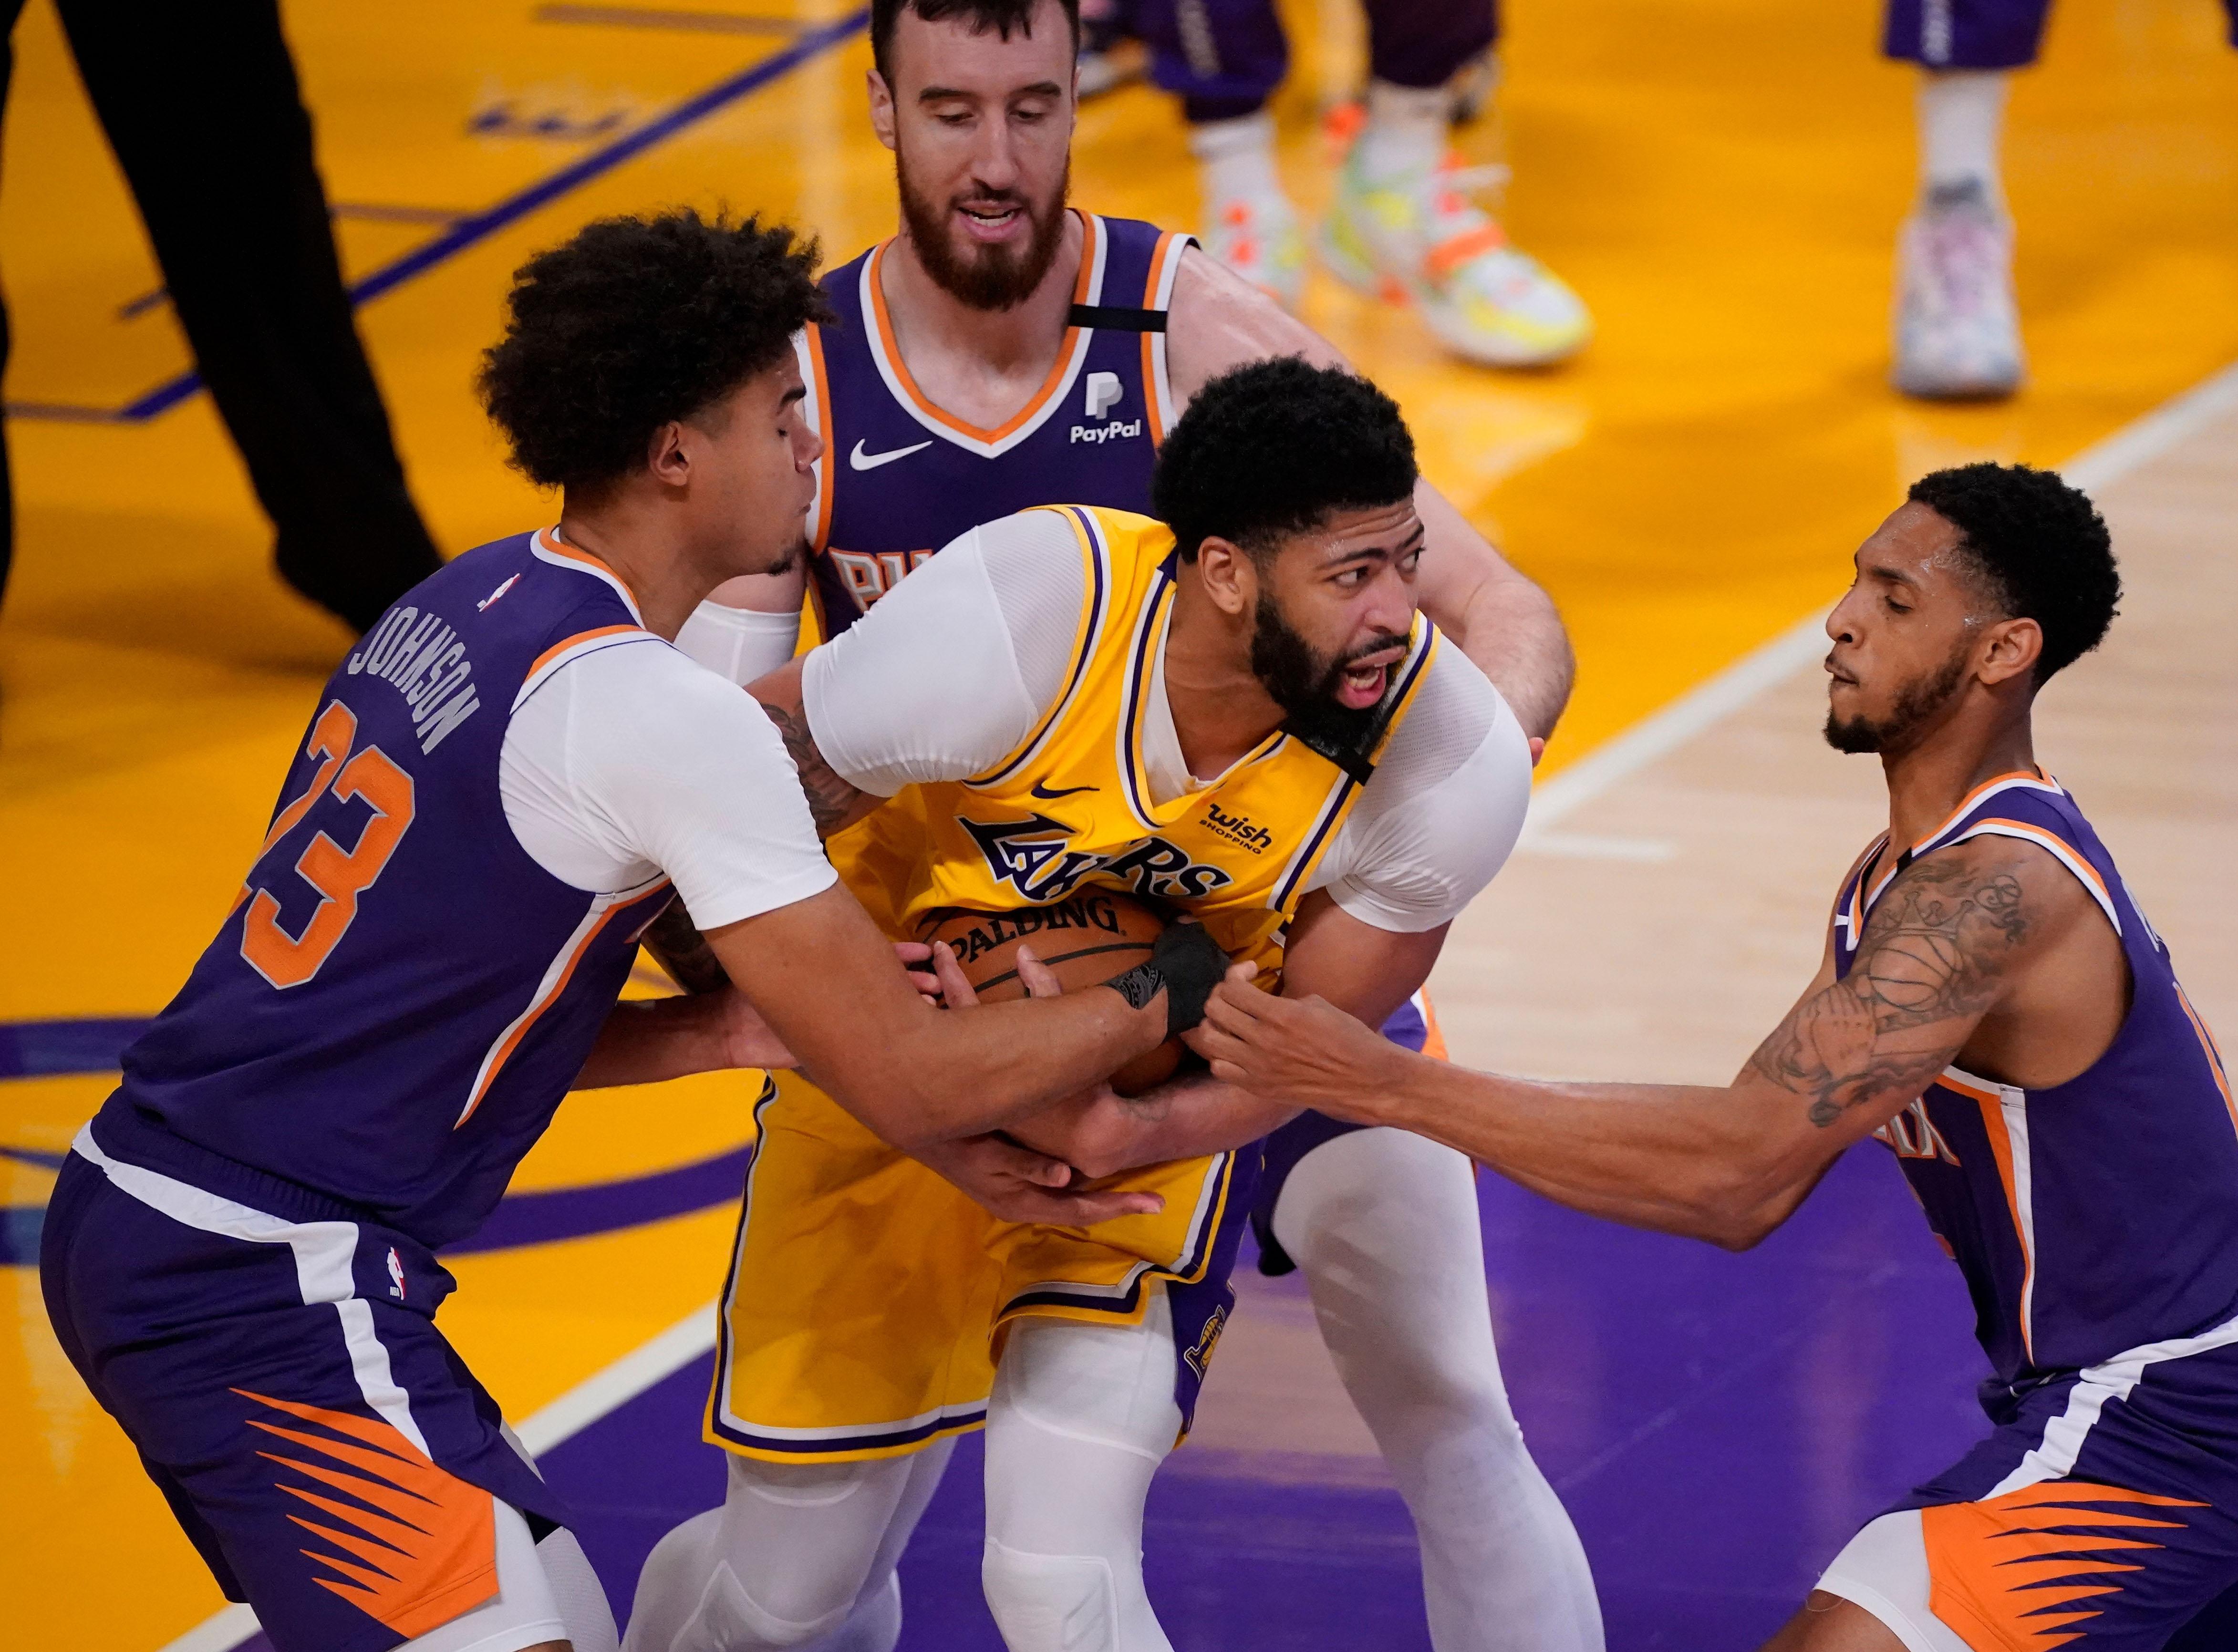 Phoenix Suns vs Los Angeles Lakers Live Stream